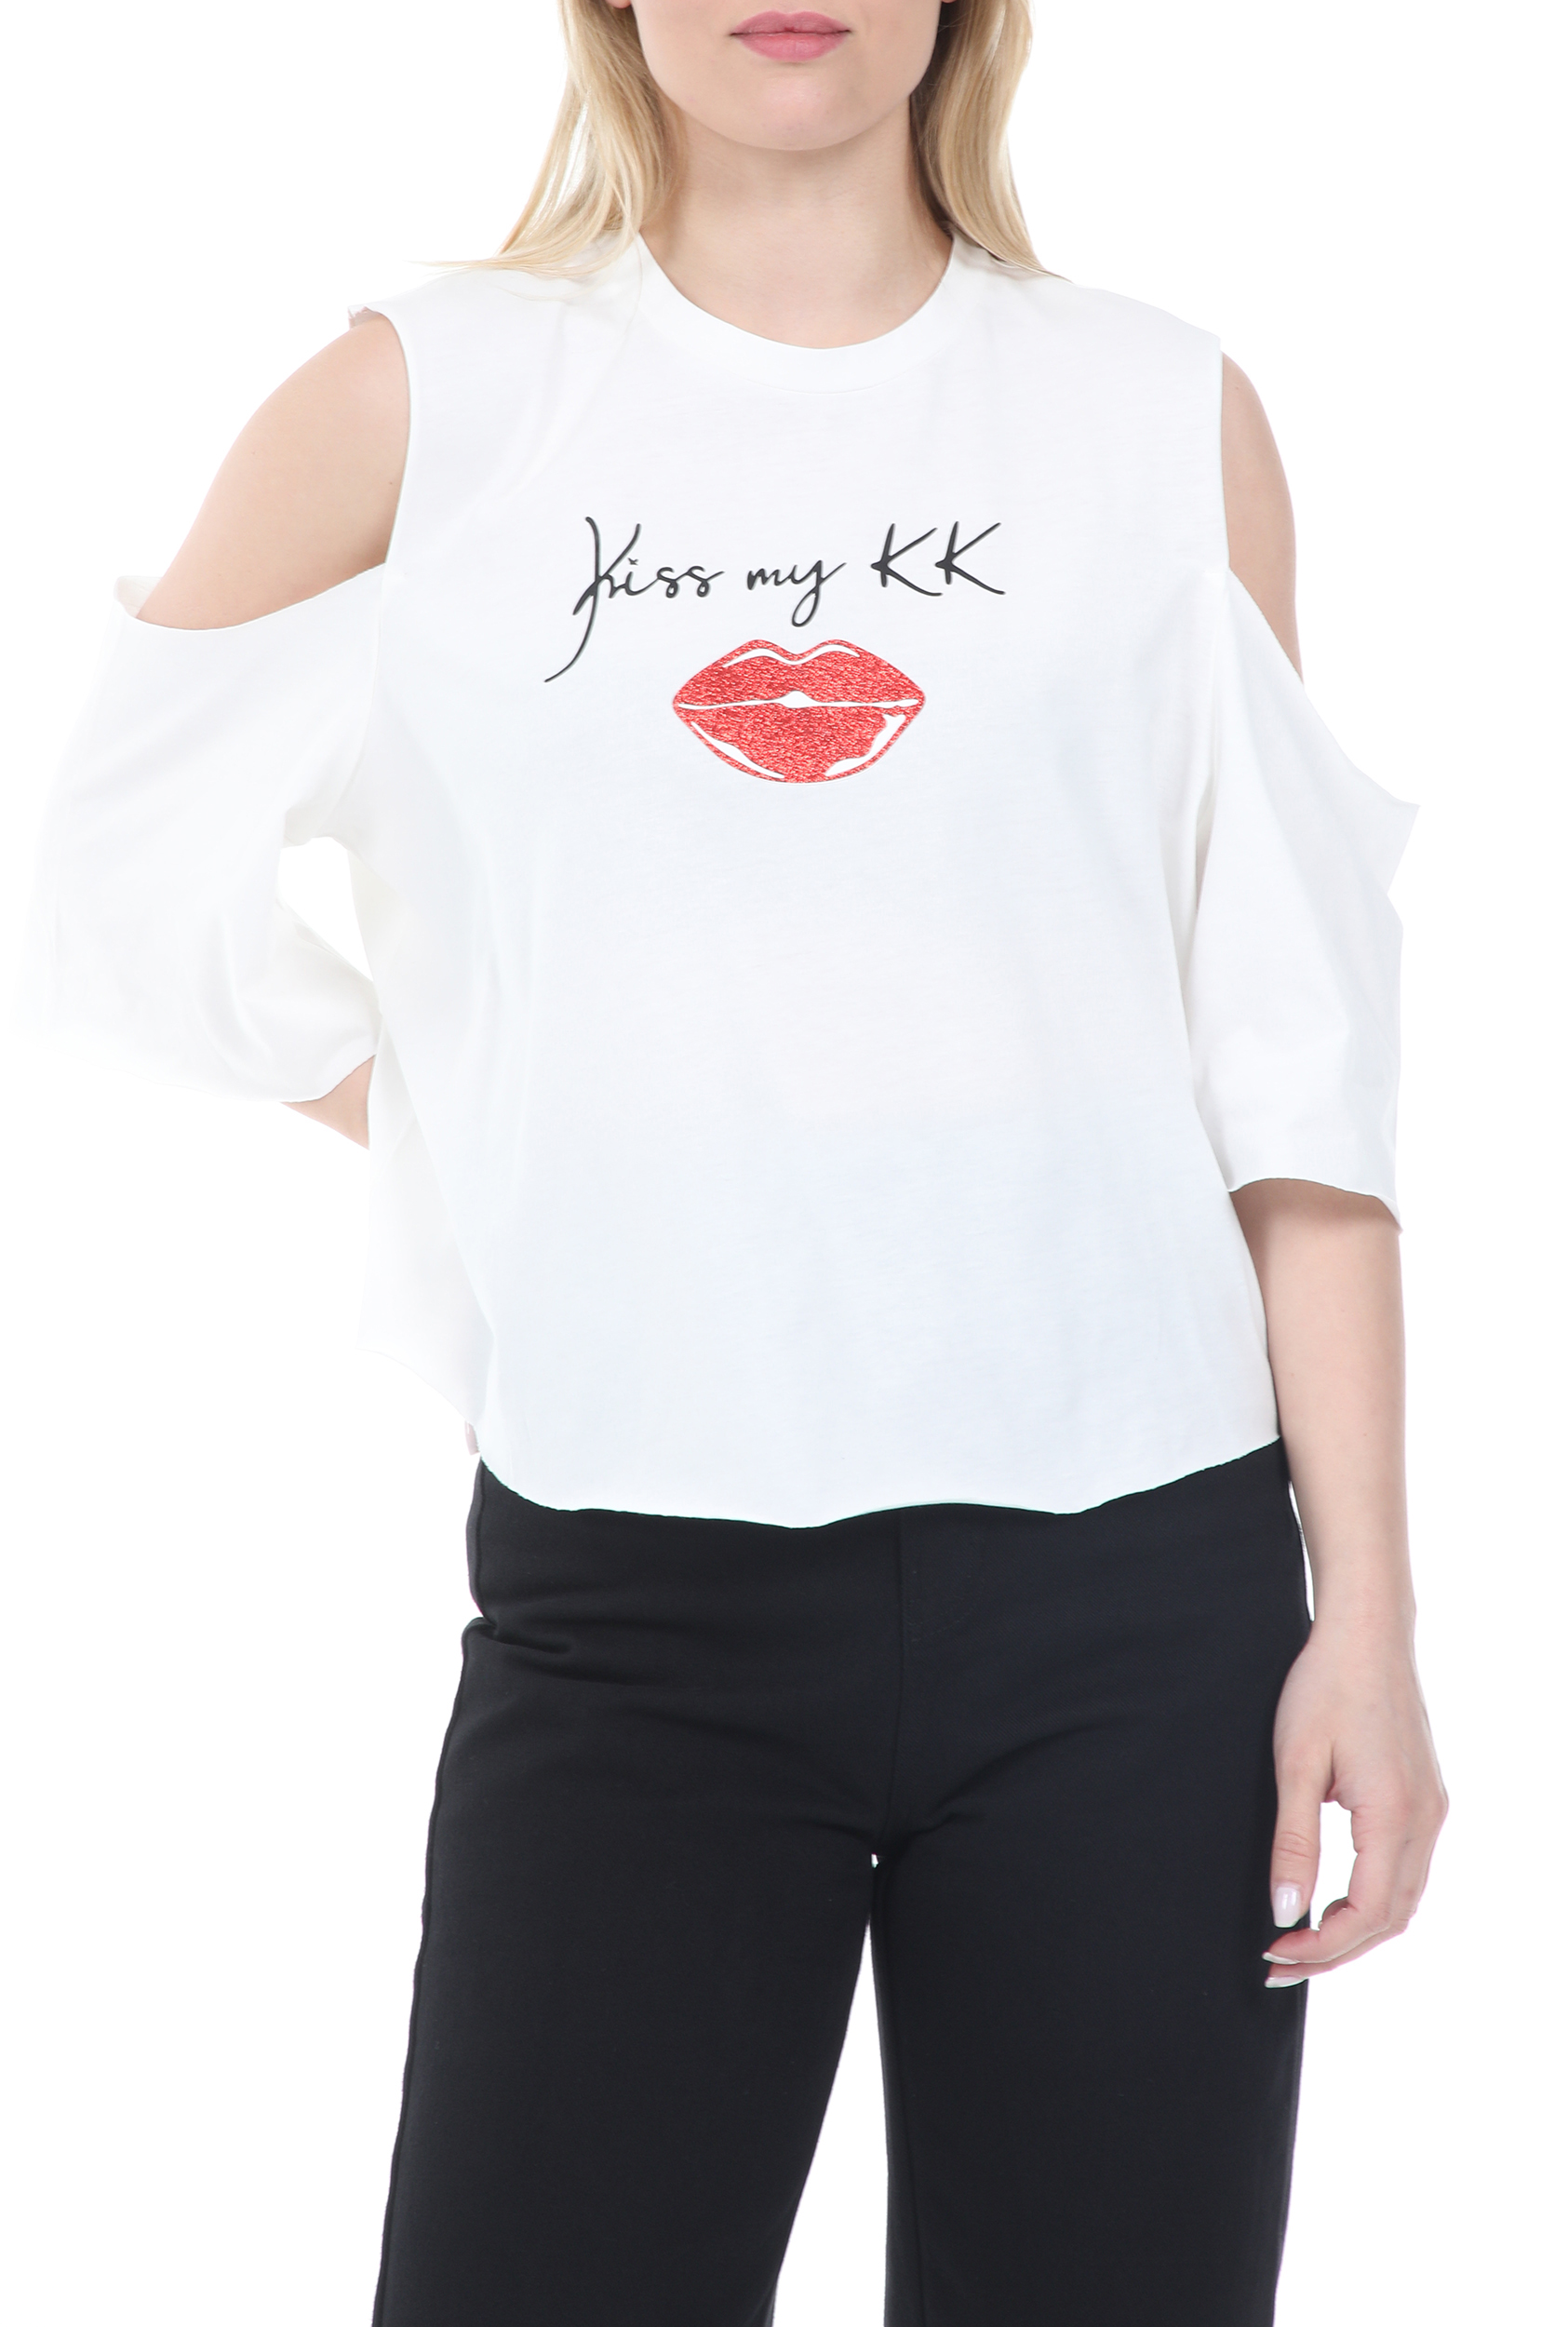 KENDALL + KYLIE – Γυναικεία μπλούζα KENDALL + KYLIE KISS MY LIPS λευκή 1811185.0-0091